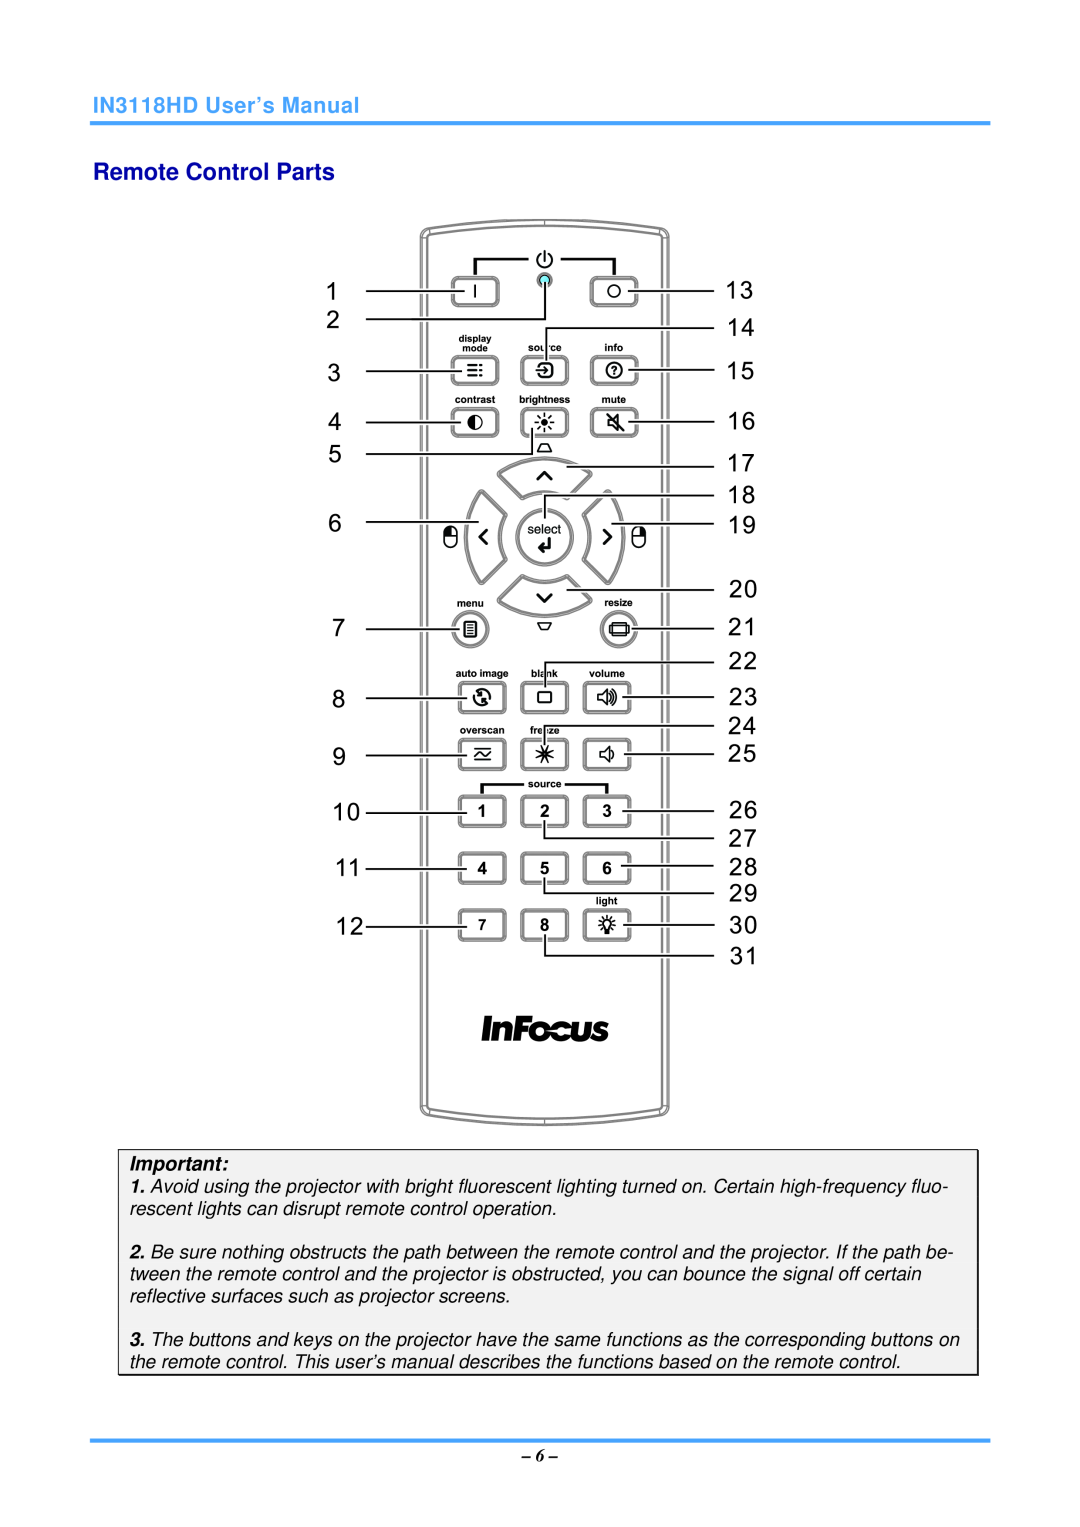 InFocus manual Remote Control Parts, IN3118HD User’s Manual 